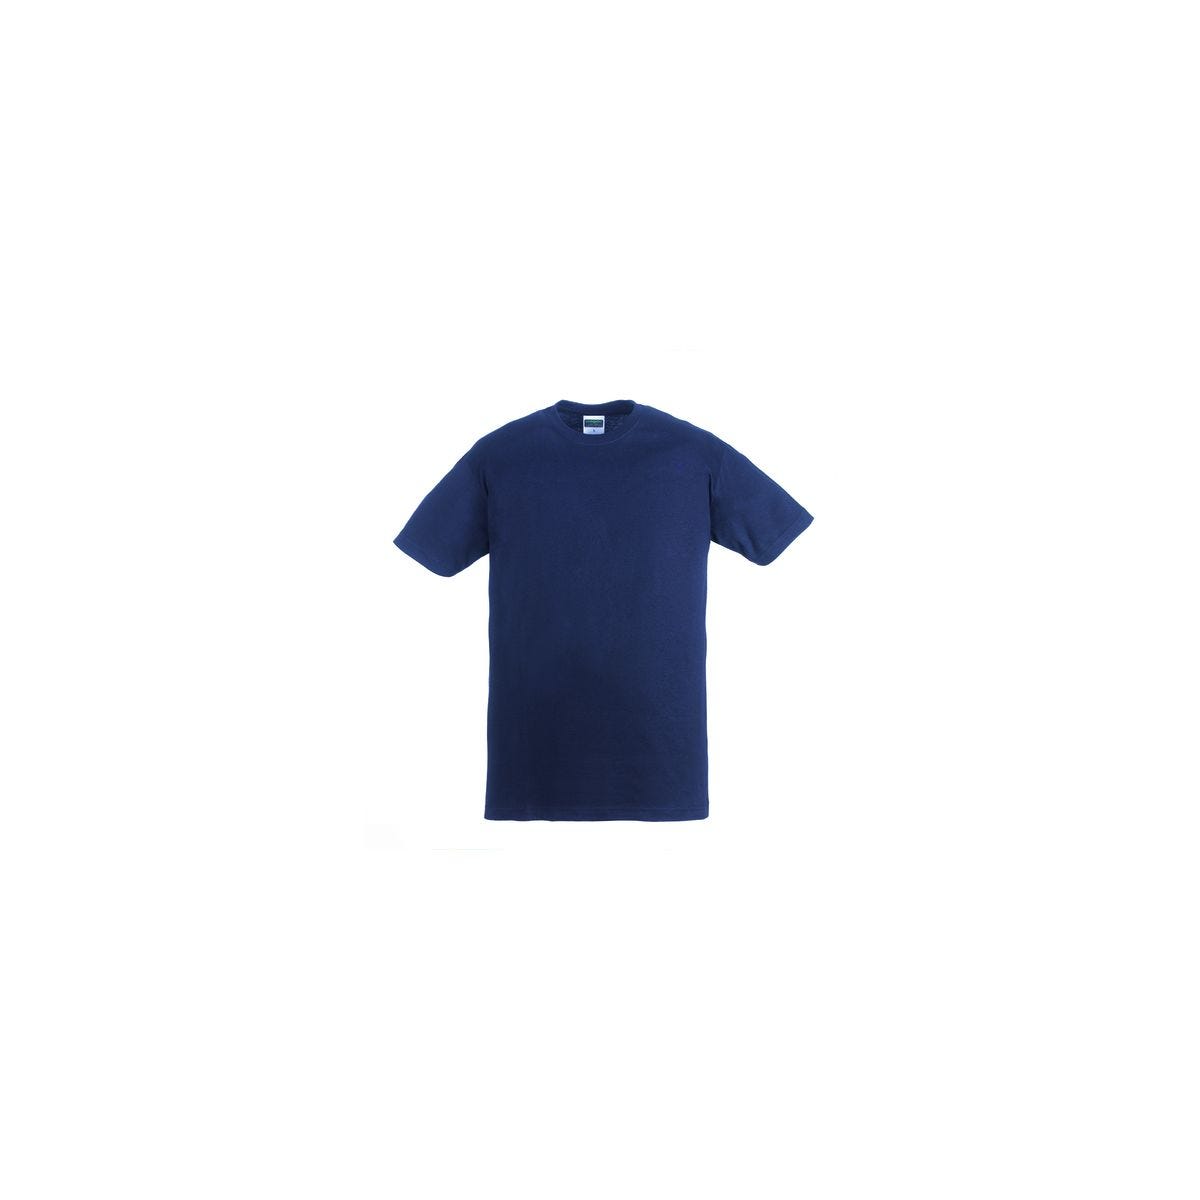 T-shirt TRIP MC marine - COVERGUARD - Taille S 0